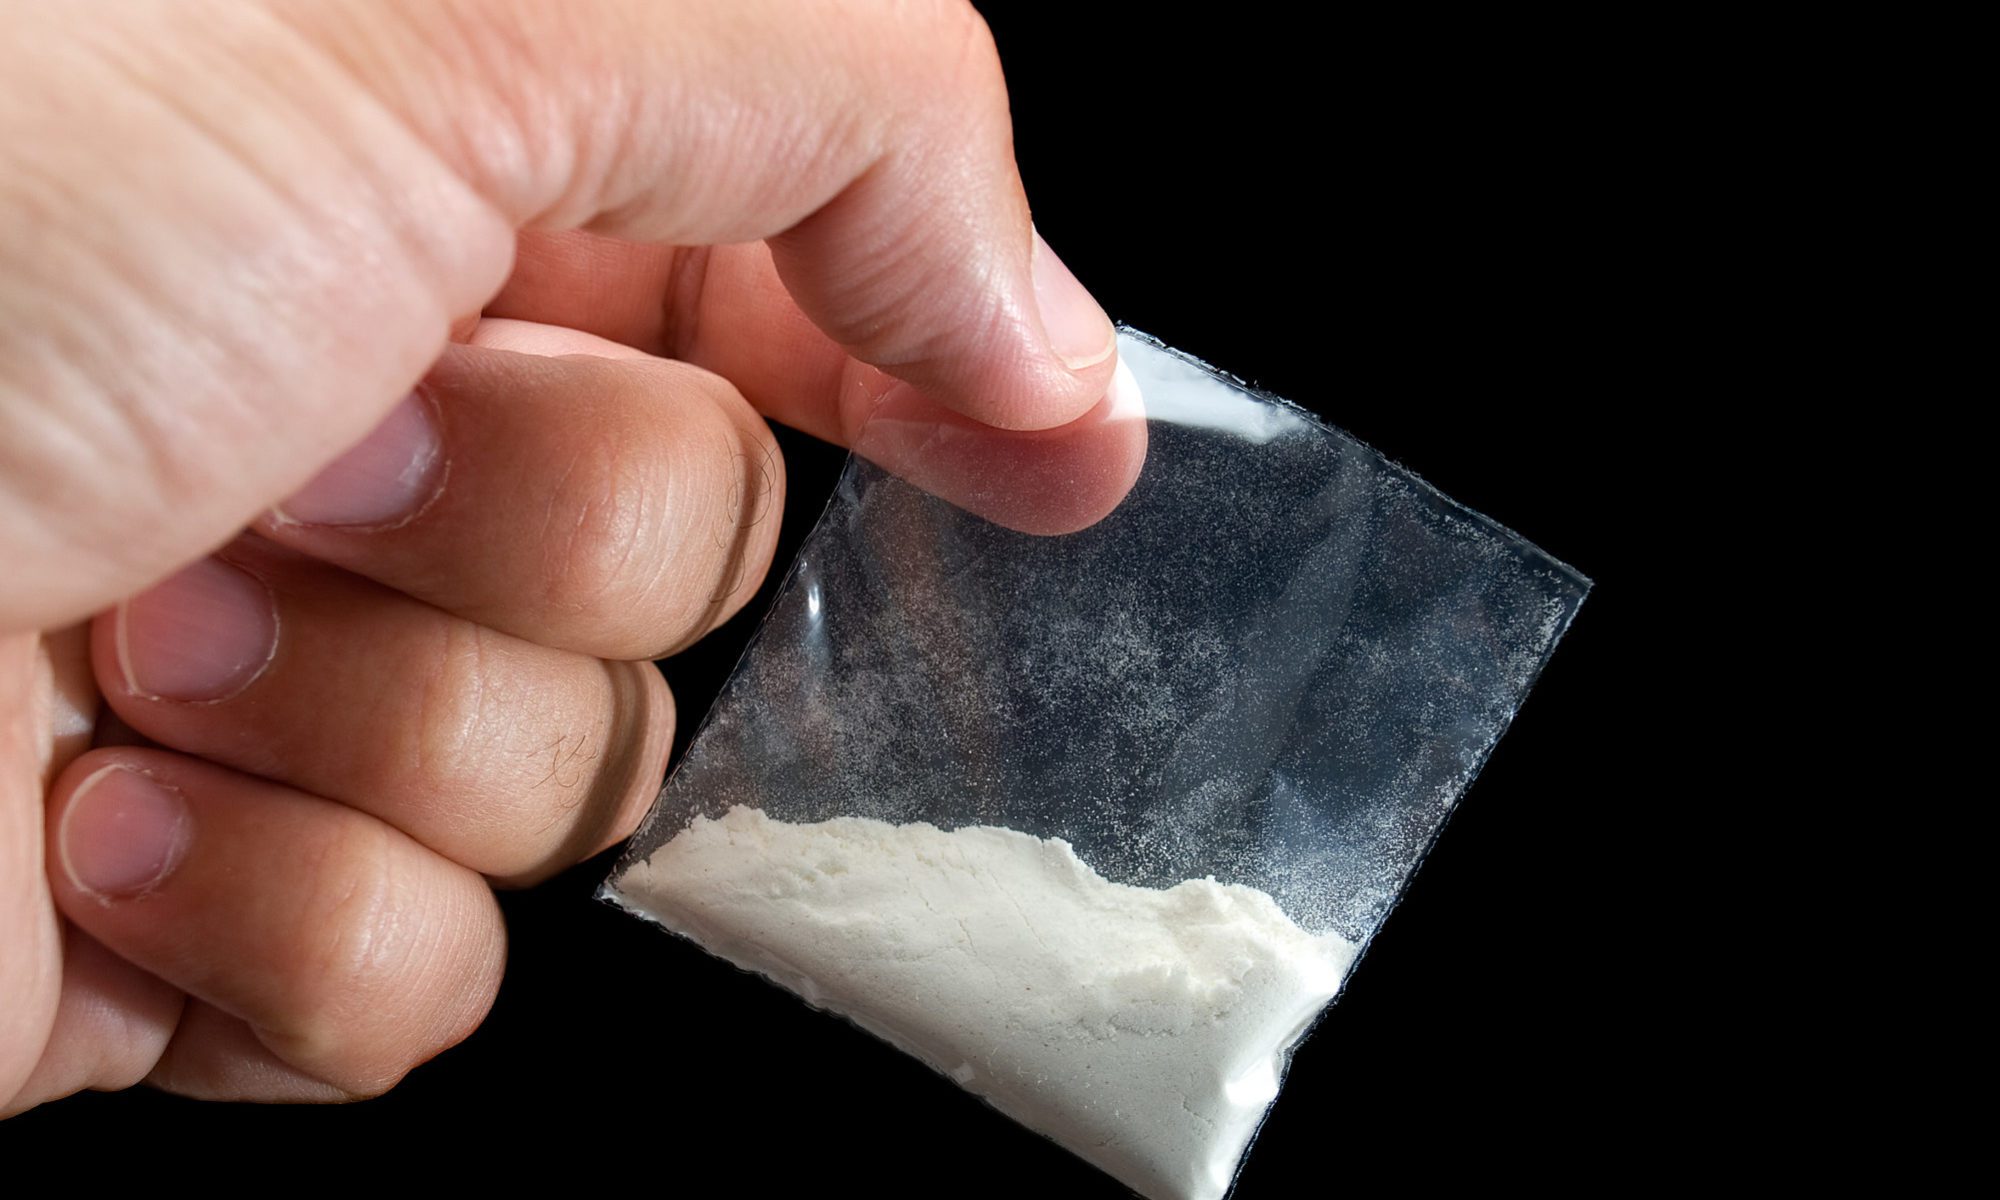 cocaine distribution charges defense